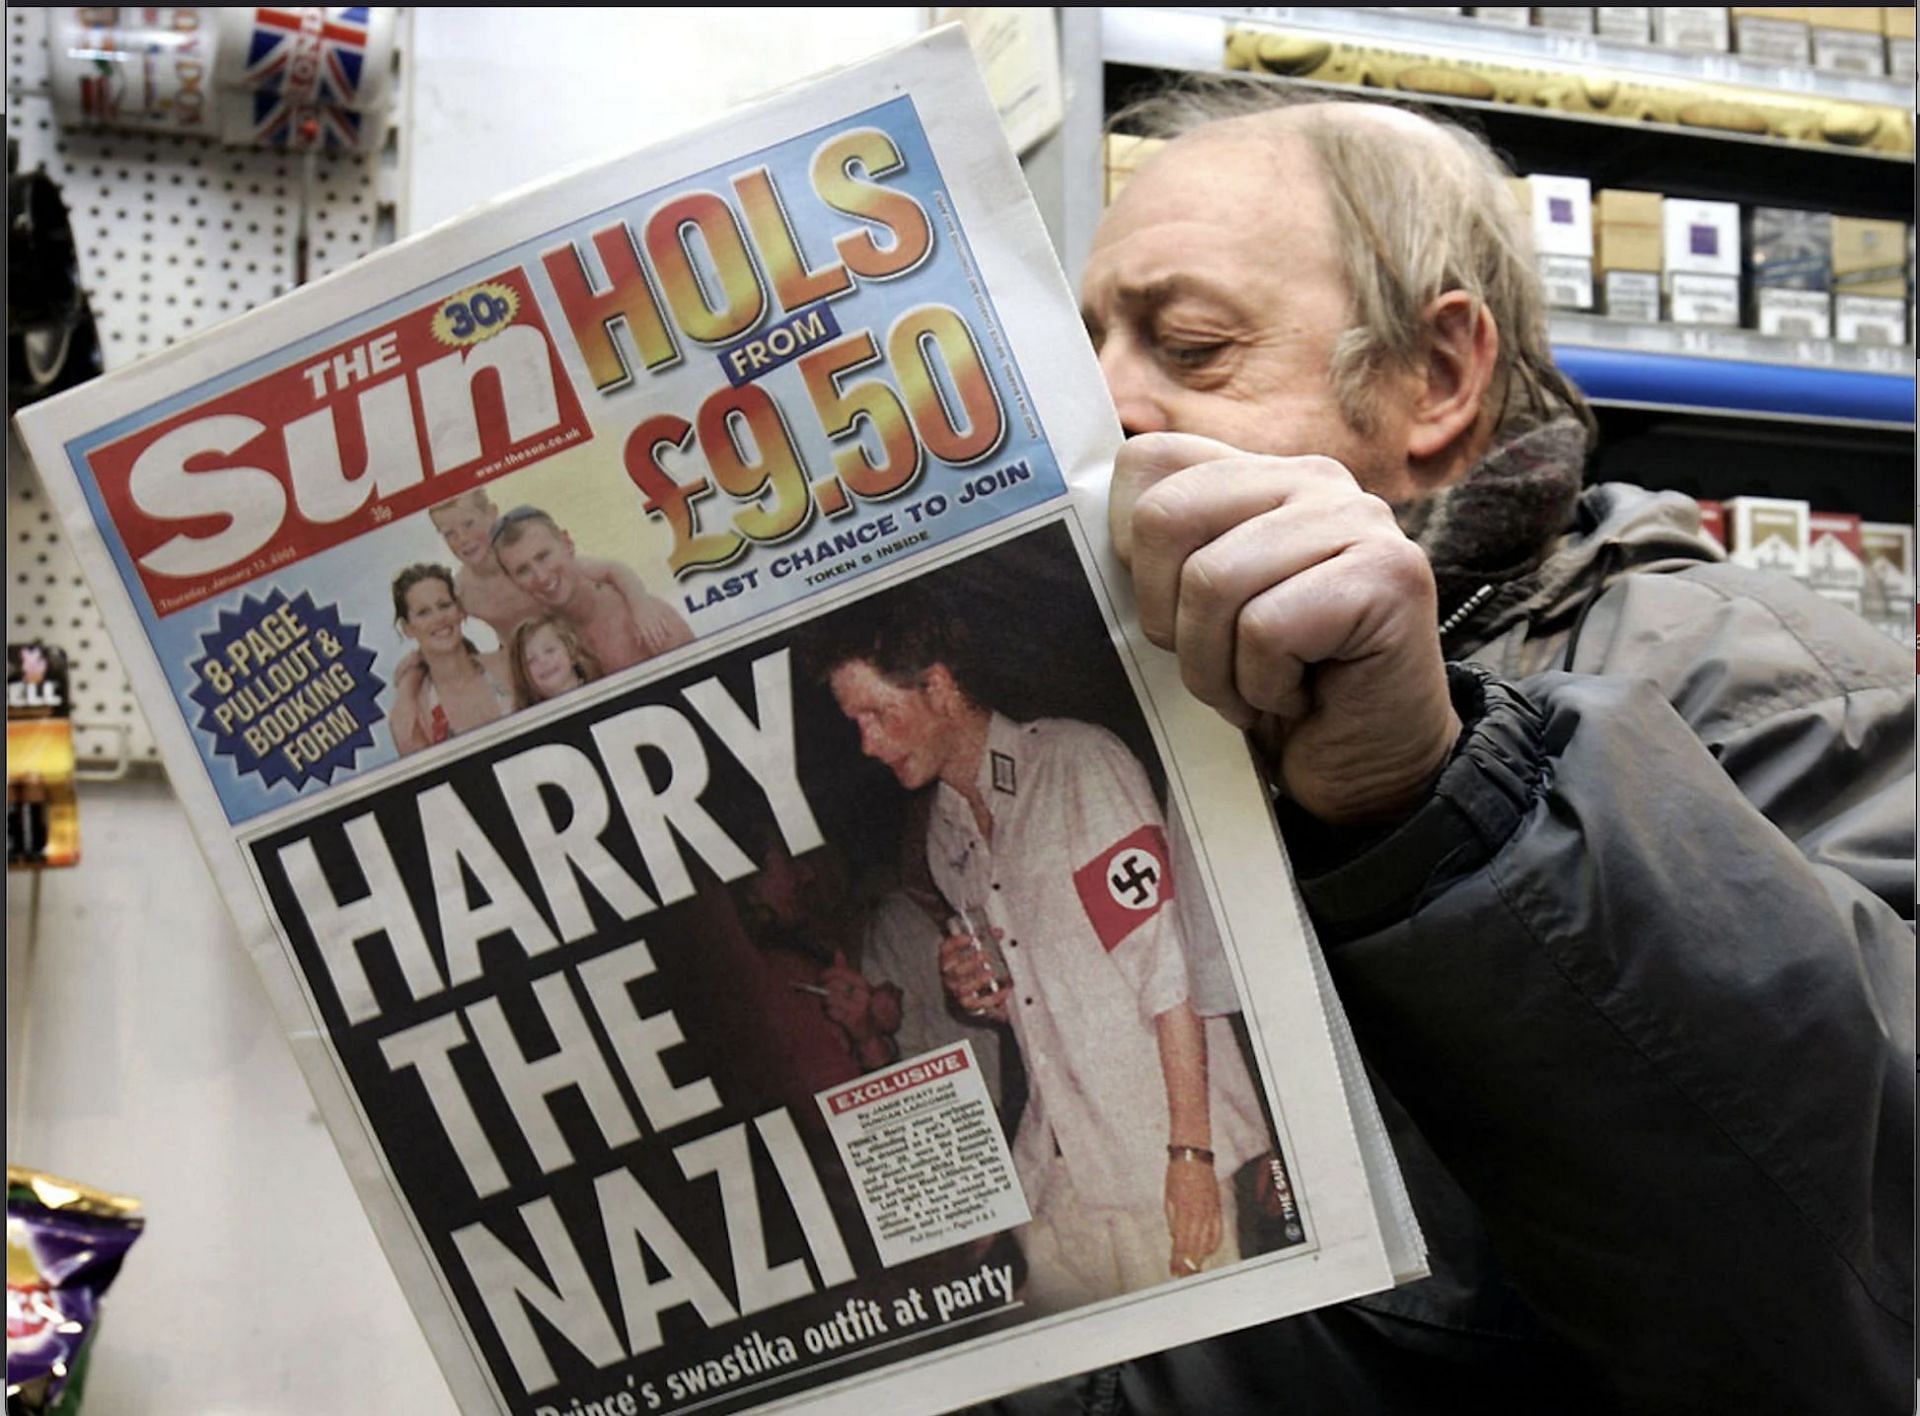 Image of Prince Harry in a Nazi costume resurfaces online; receives major backlash. (Image via Adam Butler/ AP Photo)